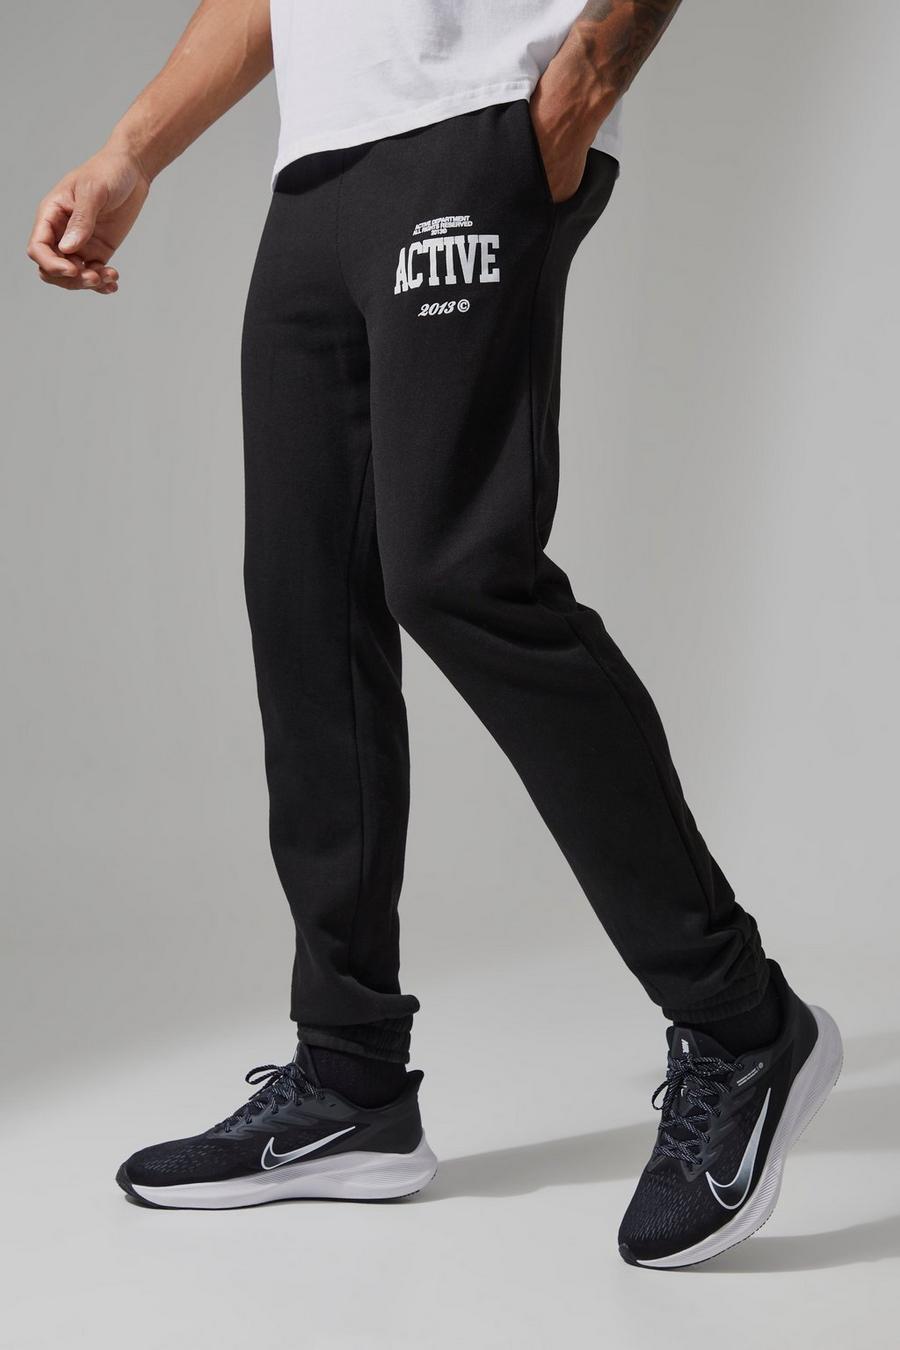 Pantaloni tuta Tall Man Active con stampa stile Varsity, Black image number 1